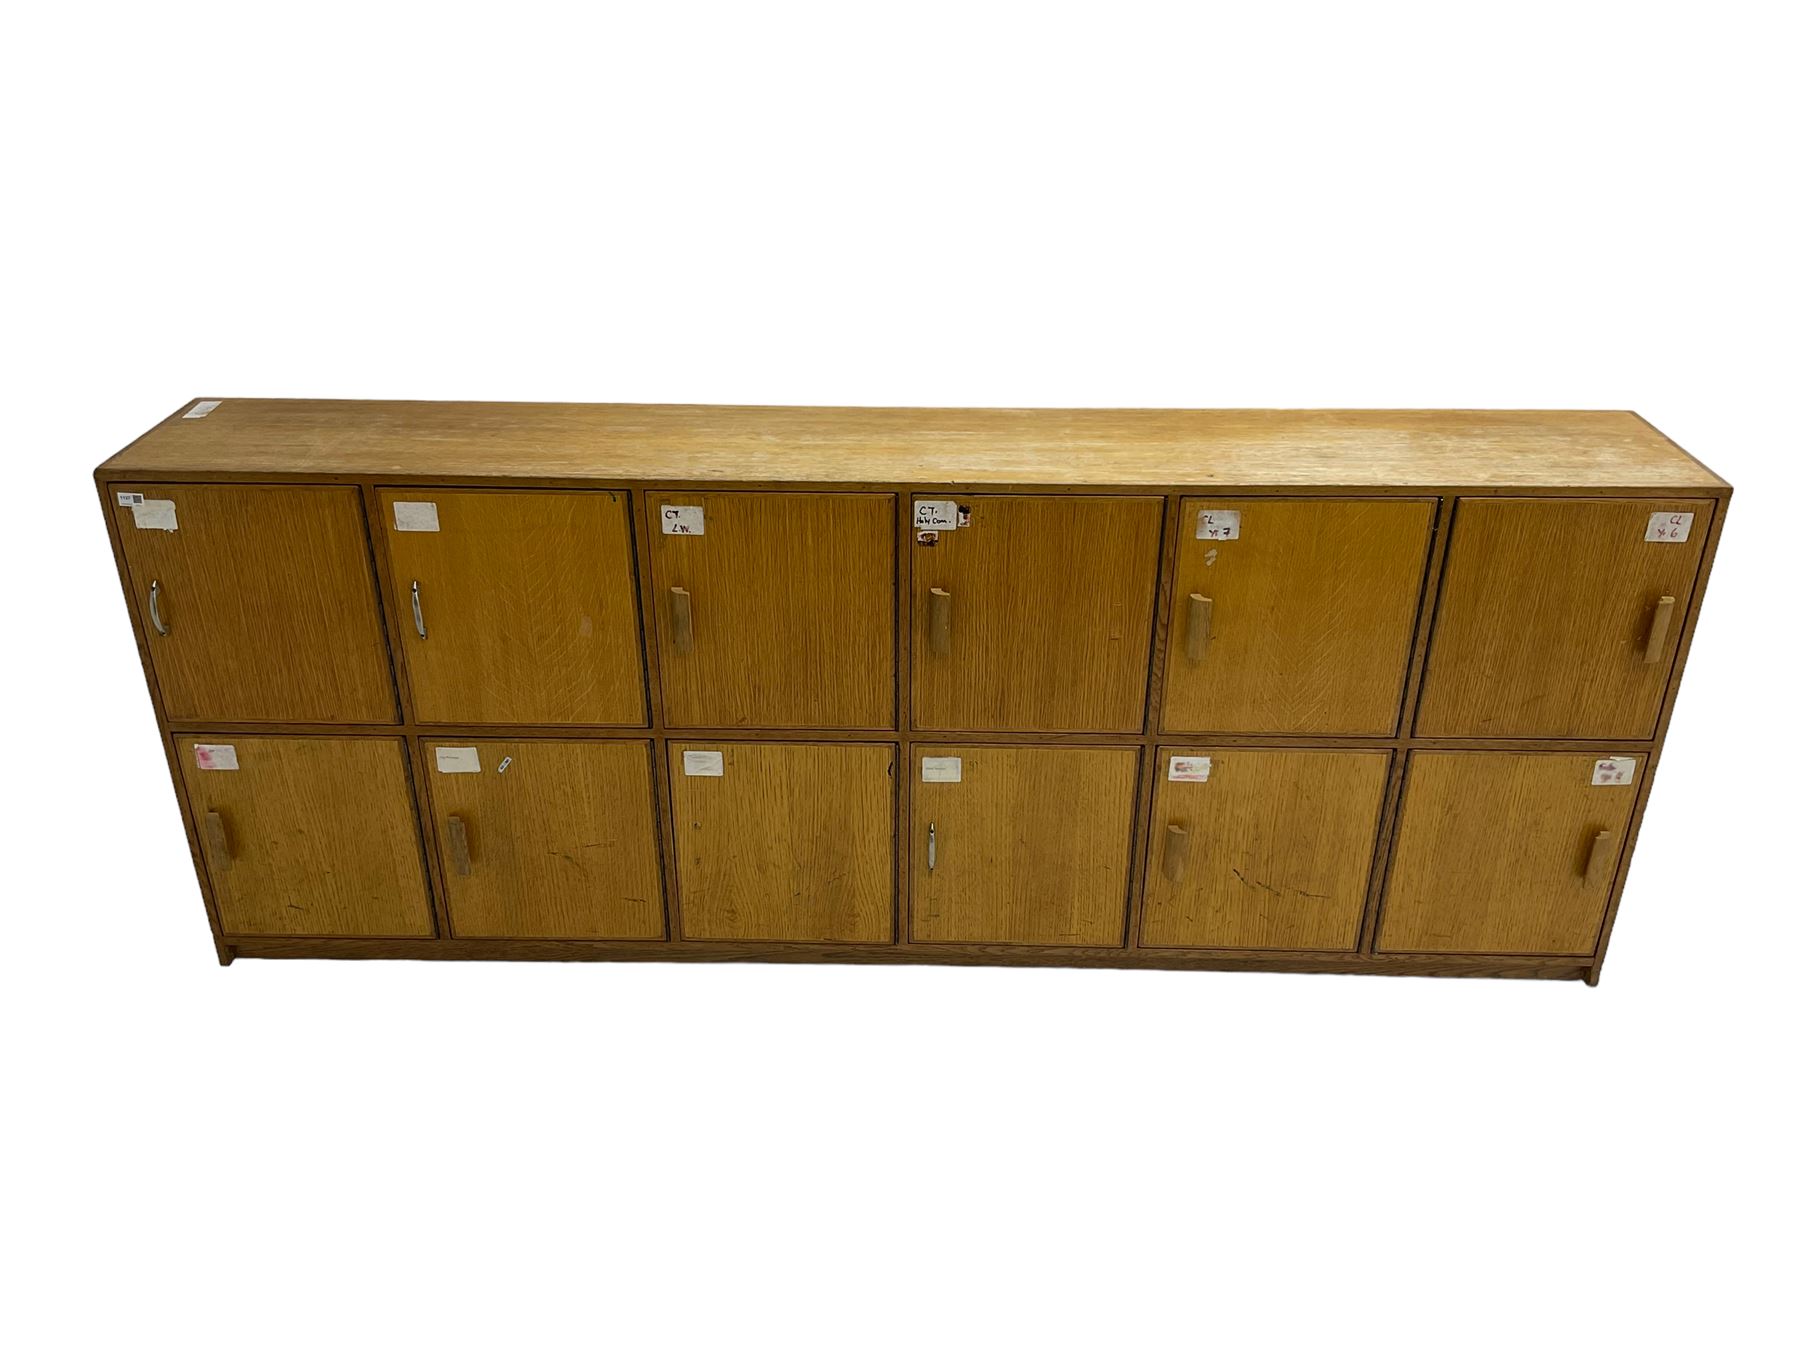 20th century oak bank of lockers - Image 2 of 6